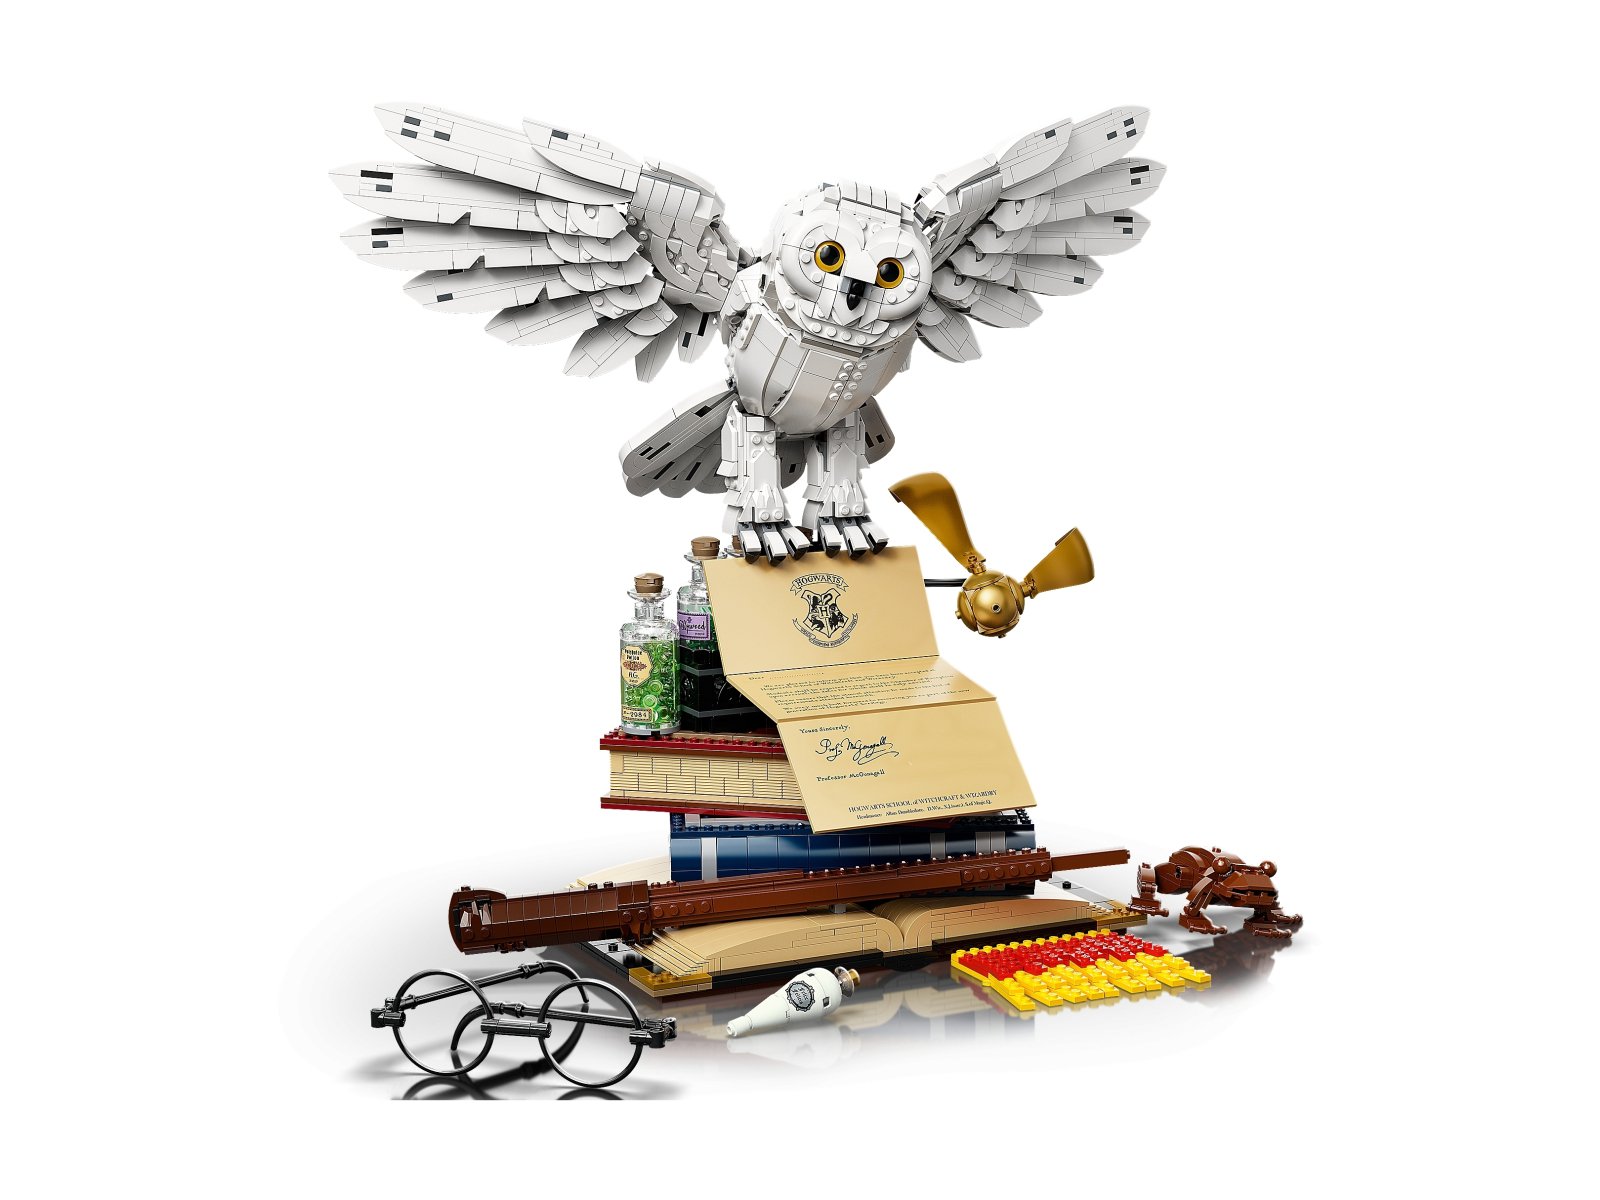 LEGO Harry Potter 76391 Ikony Hogwartu — edycja kolekcjonerska